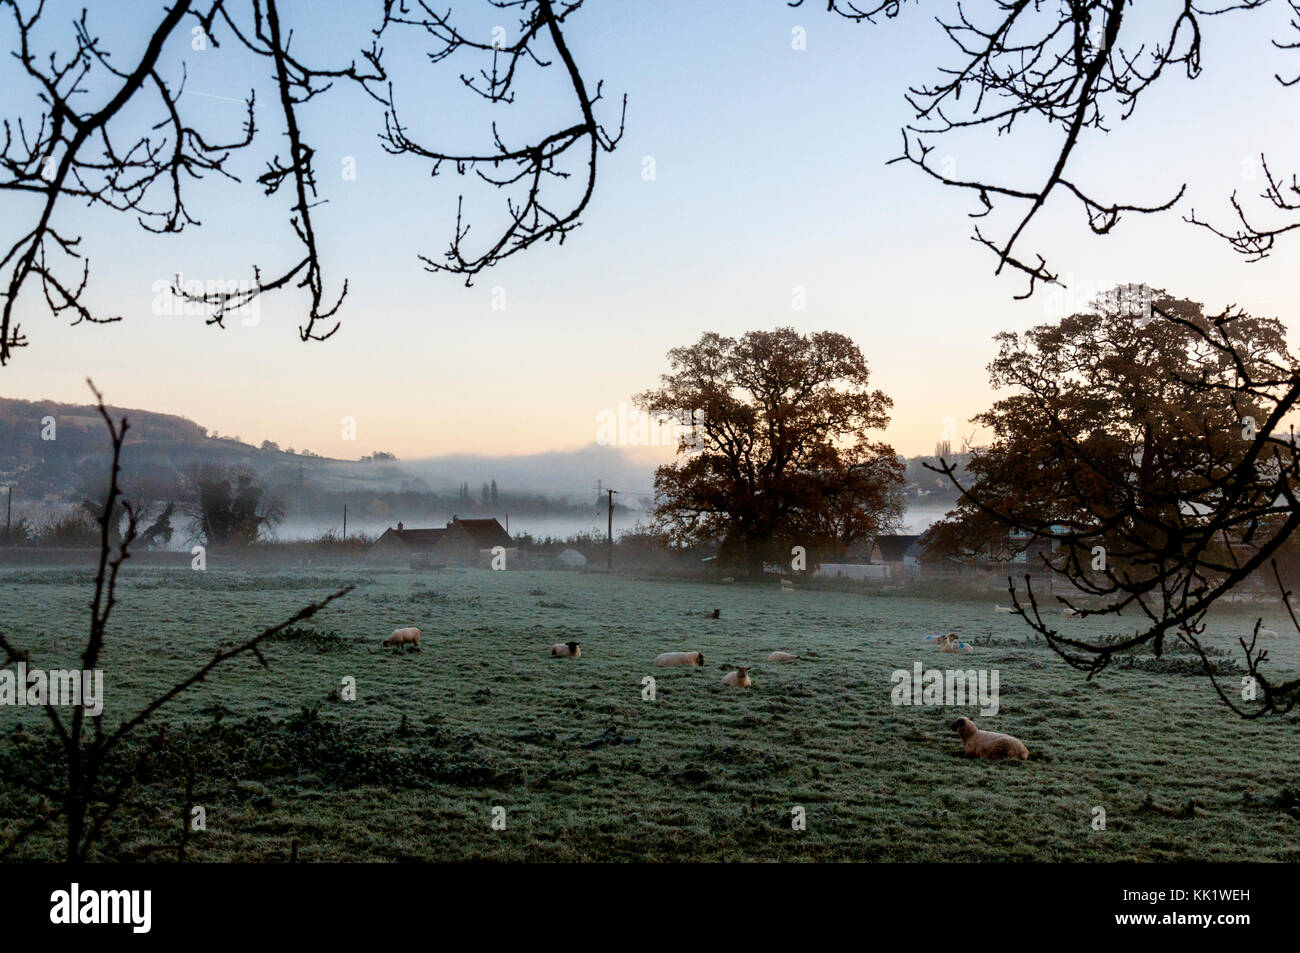 Autumn misty morning on a sheep lamb farm in Bathampton, Somerset, England, UK Stock Photo